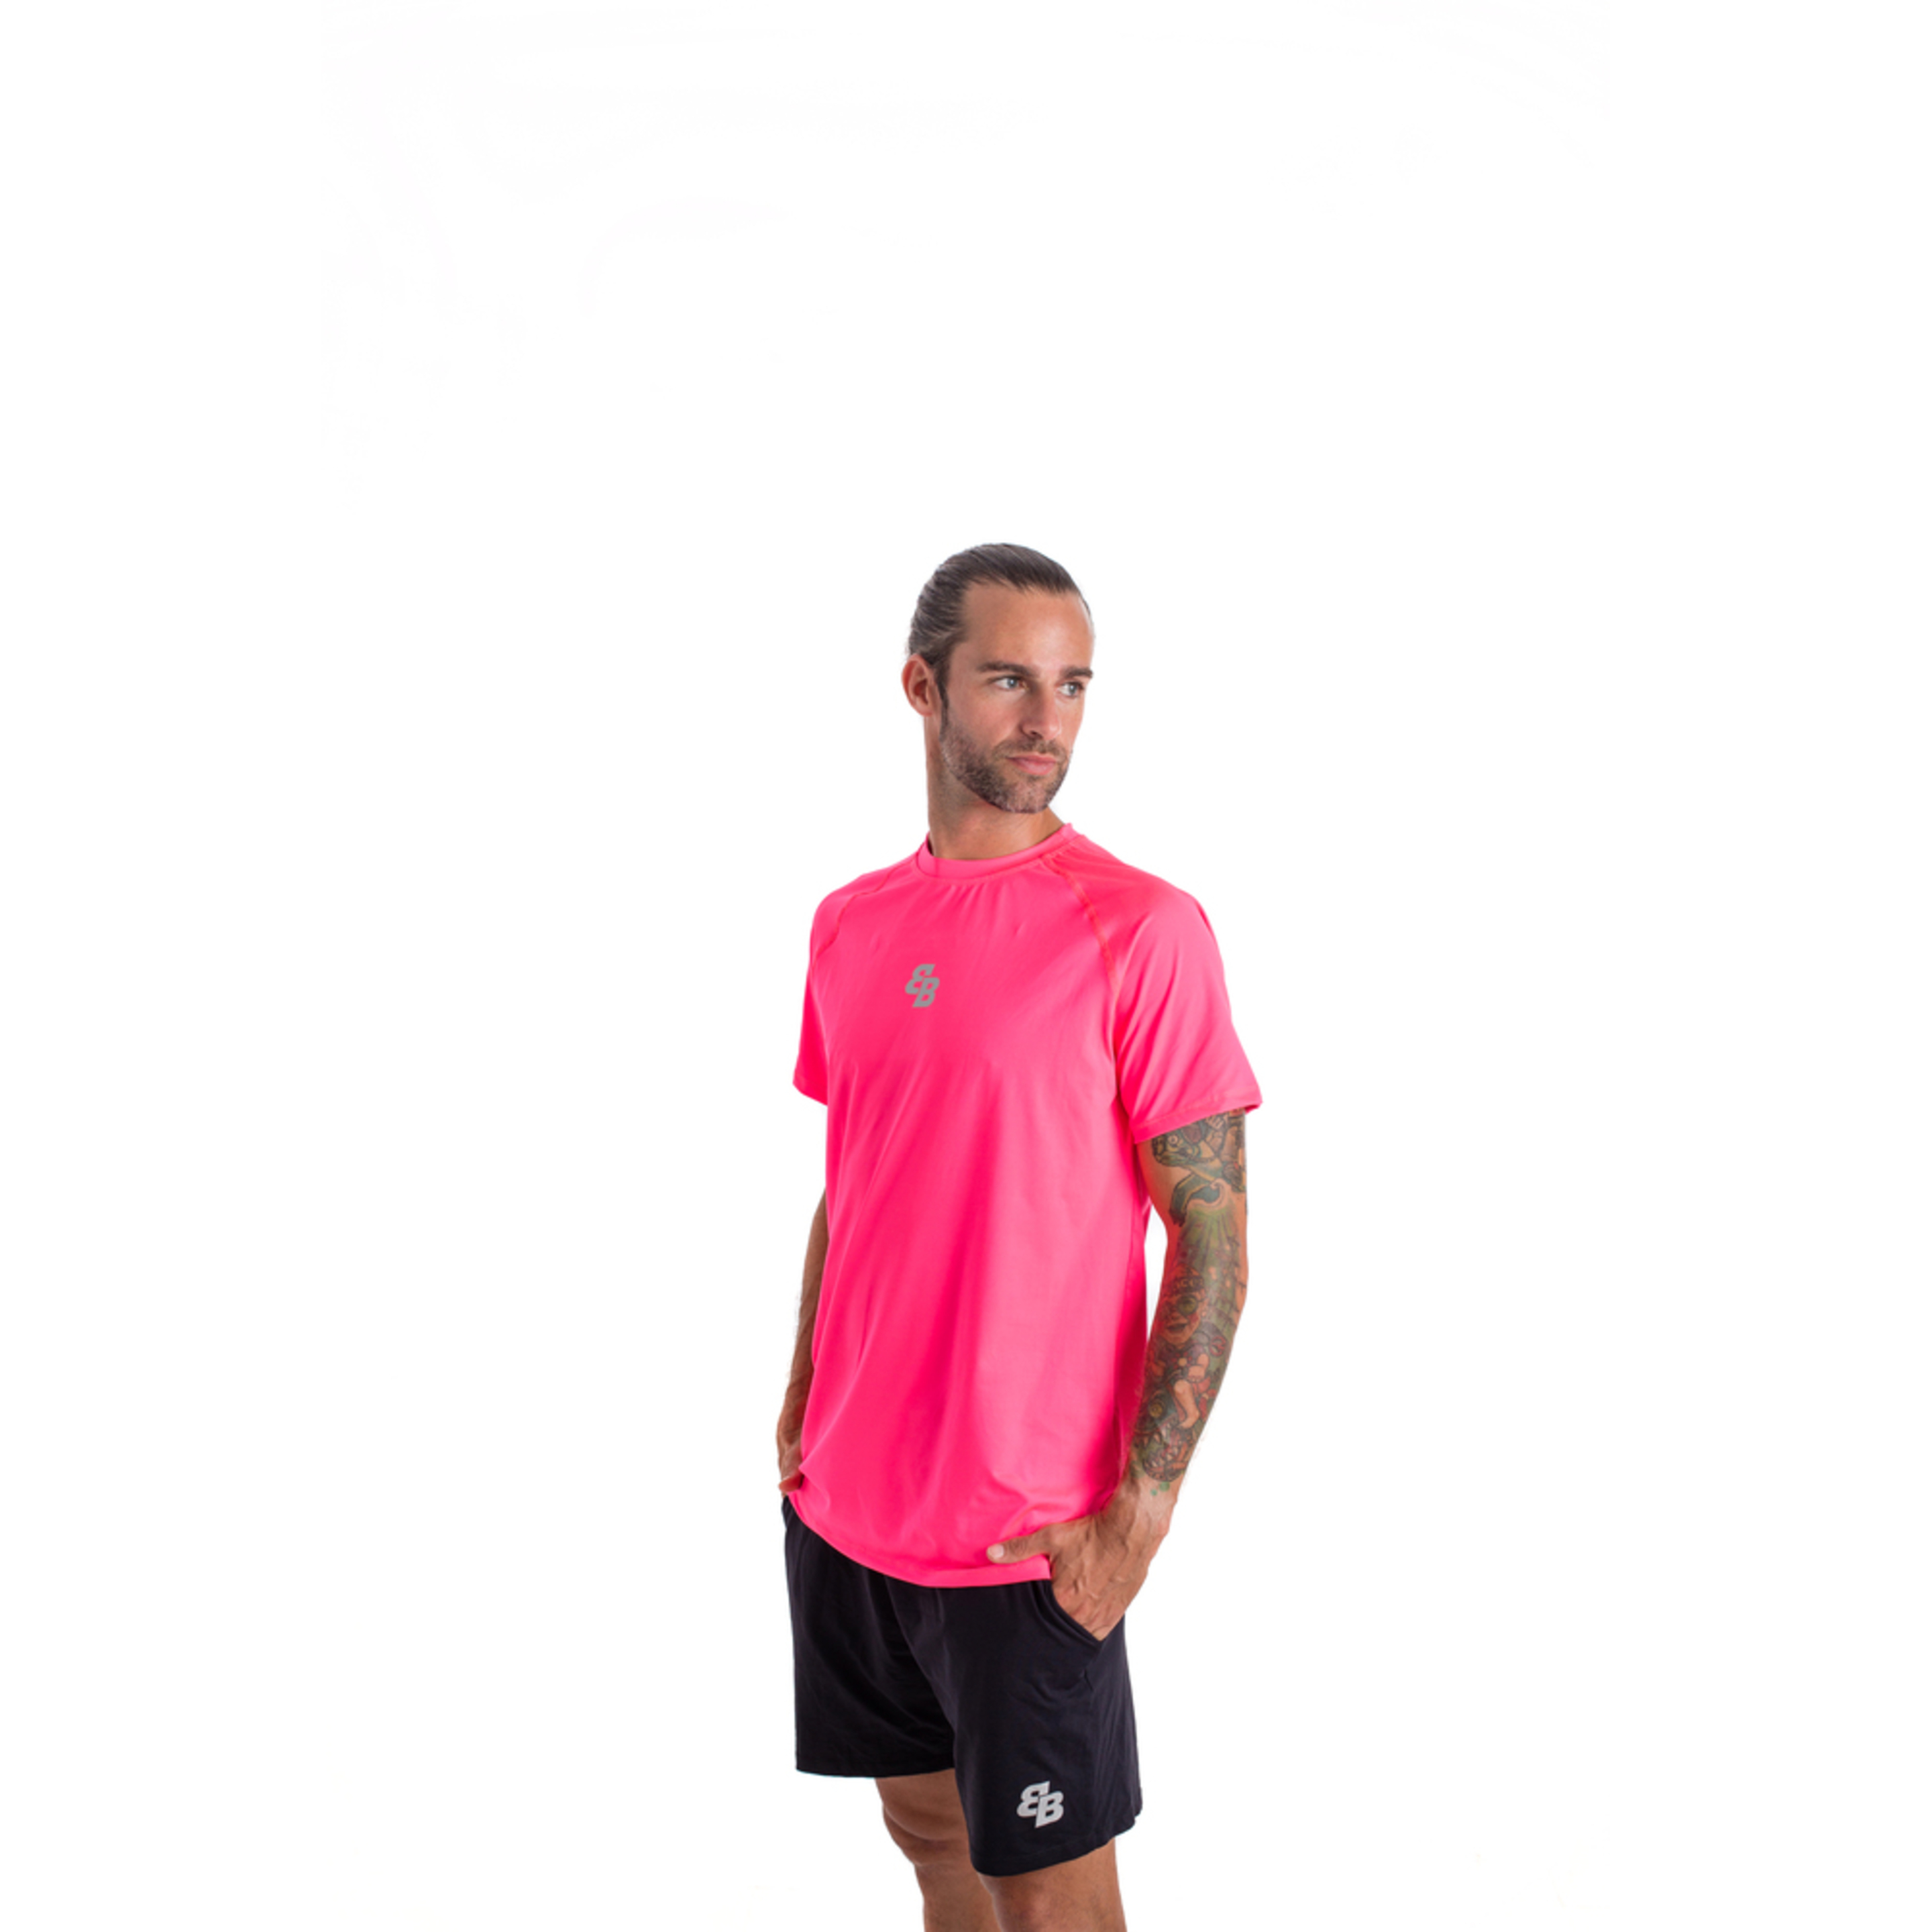 Camiseta De Pádel Y Tenis Bb By Belénberbel Pink - Rosa/Fucsia - Ropa Deportiva Hombre  MKP